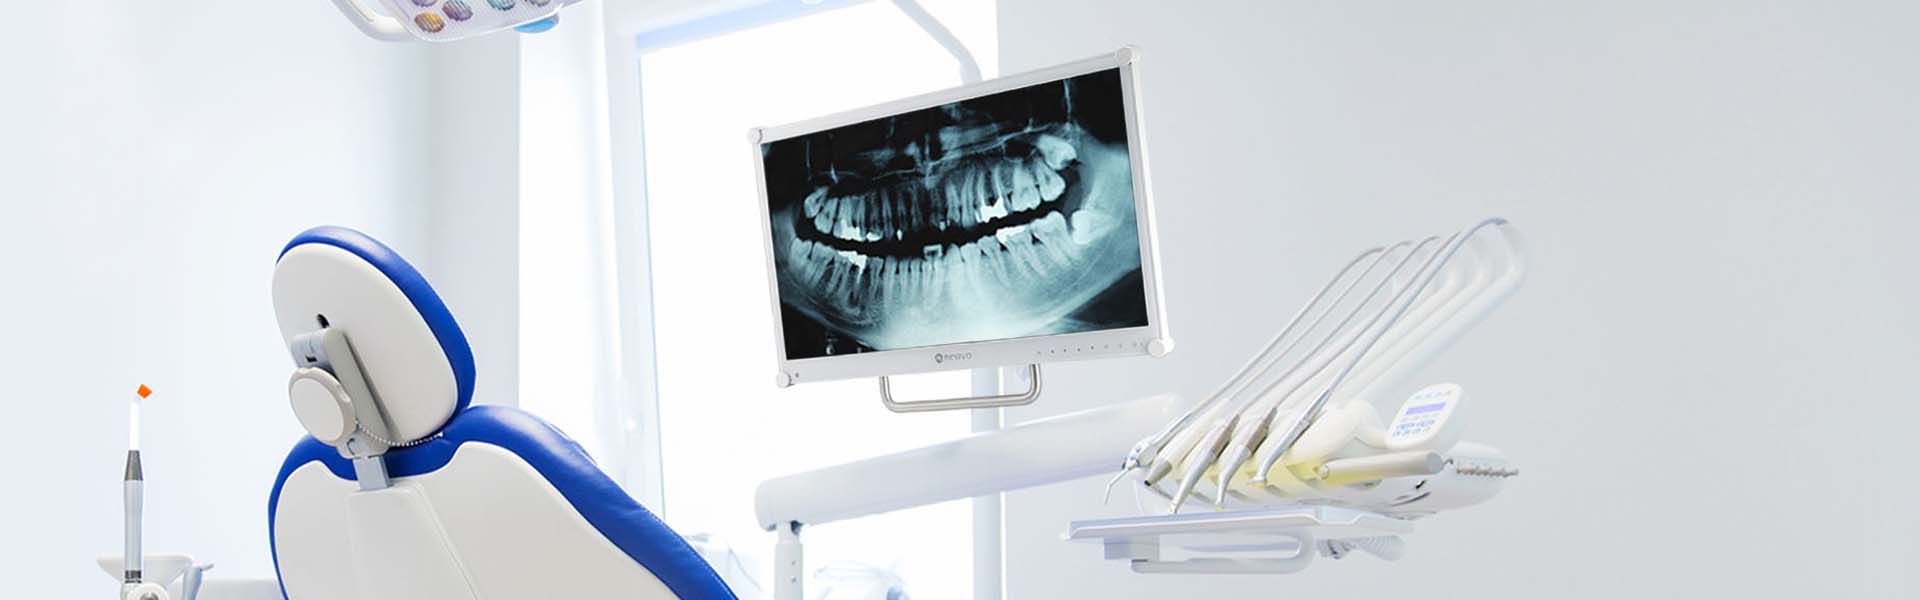 ag-neovo-dental-monitors-dr-22g